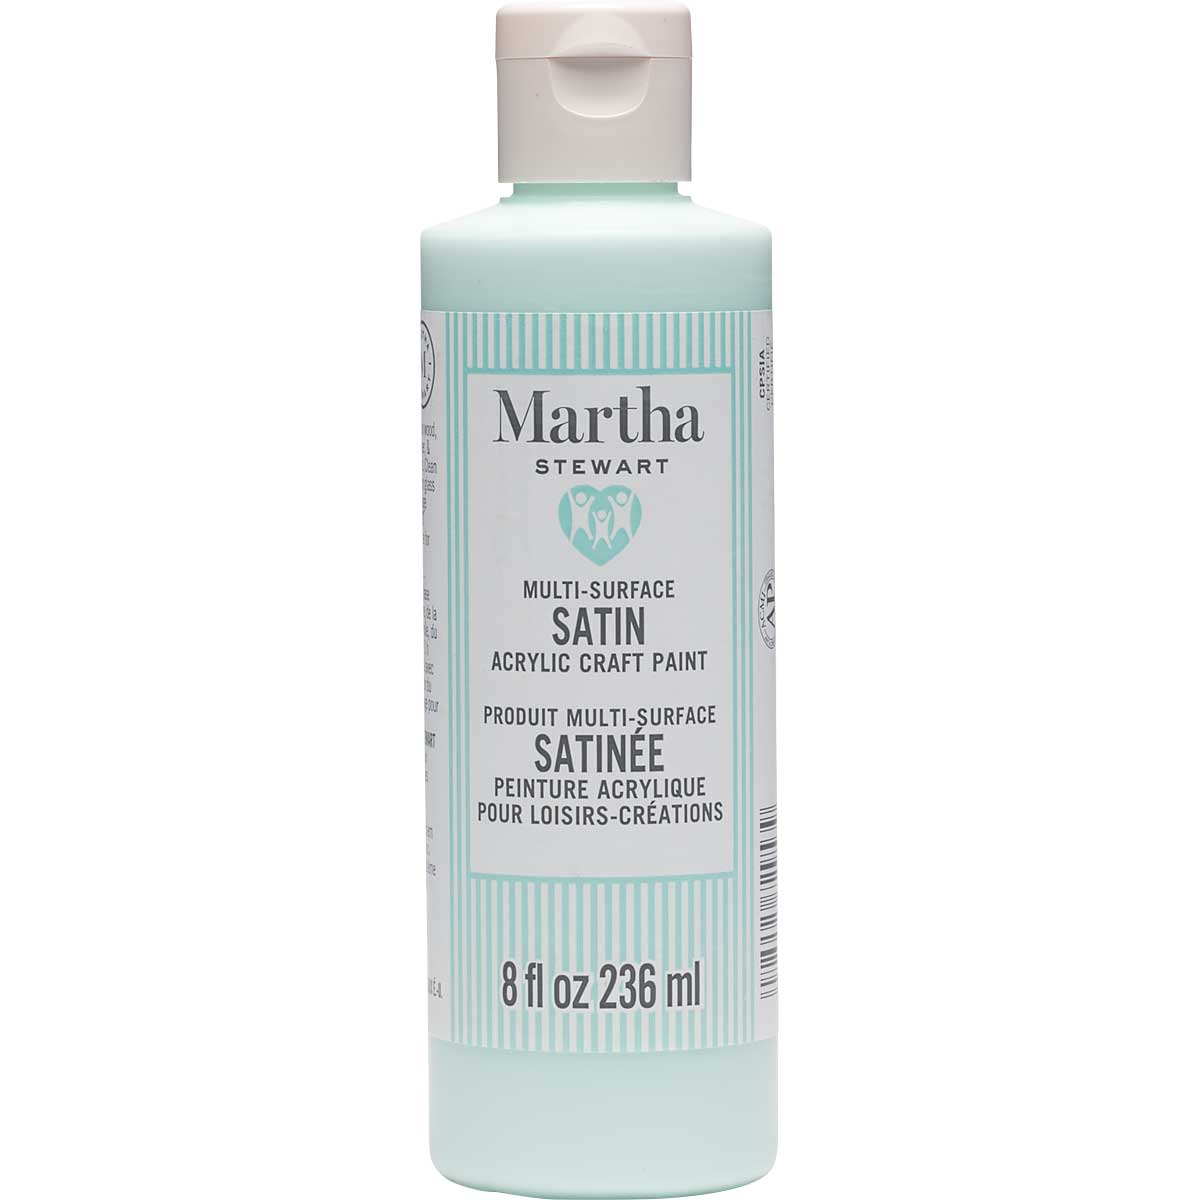 Martha Stewart ® Multi-Surface Satin Acrylic Craft Paint CPSIA - Kiddie Pool, 8 oz. - 72953